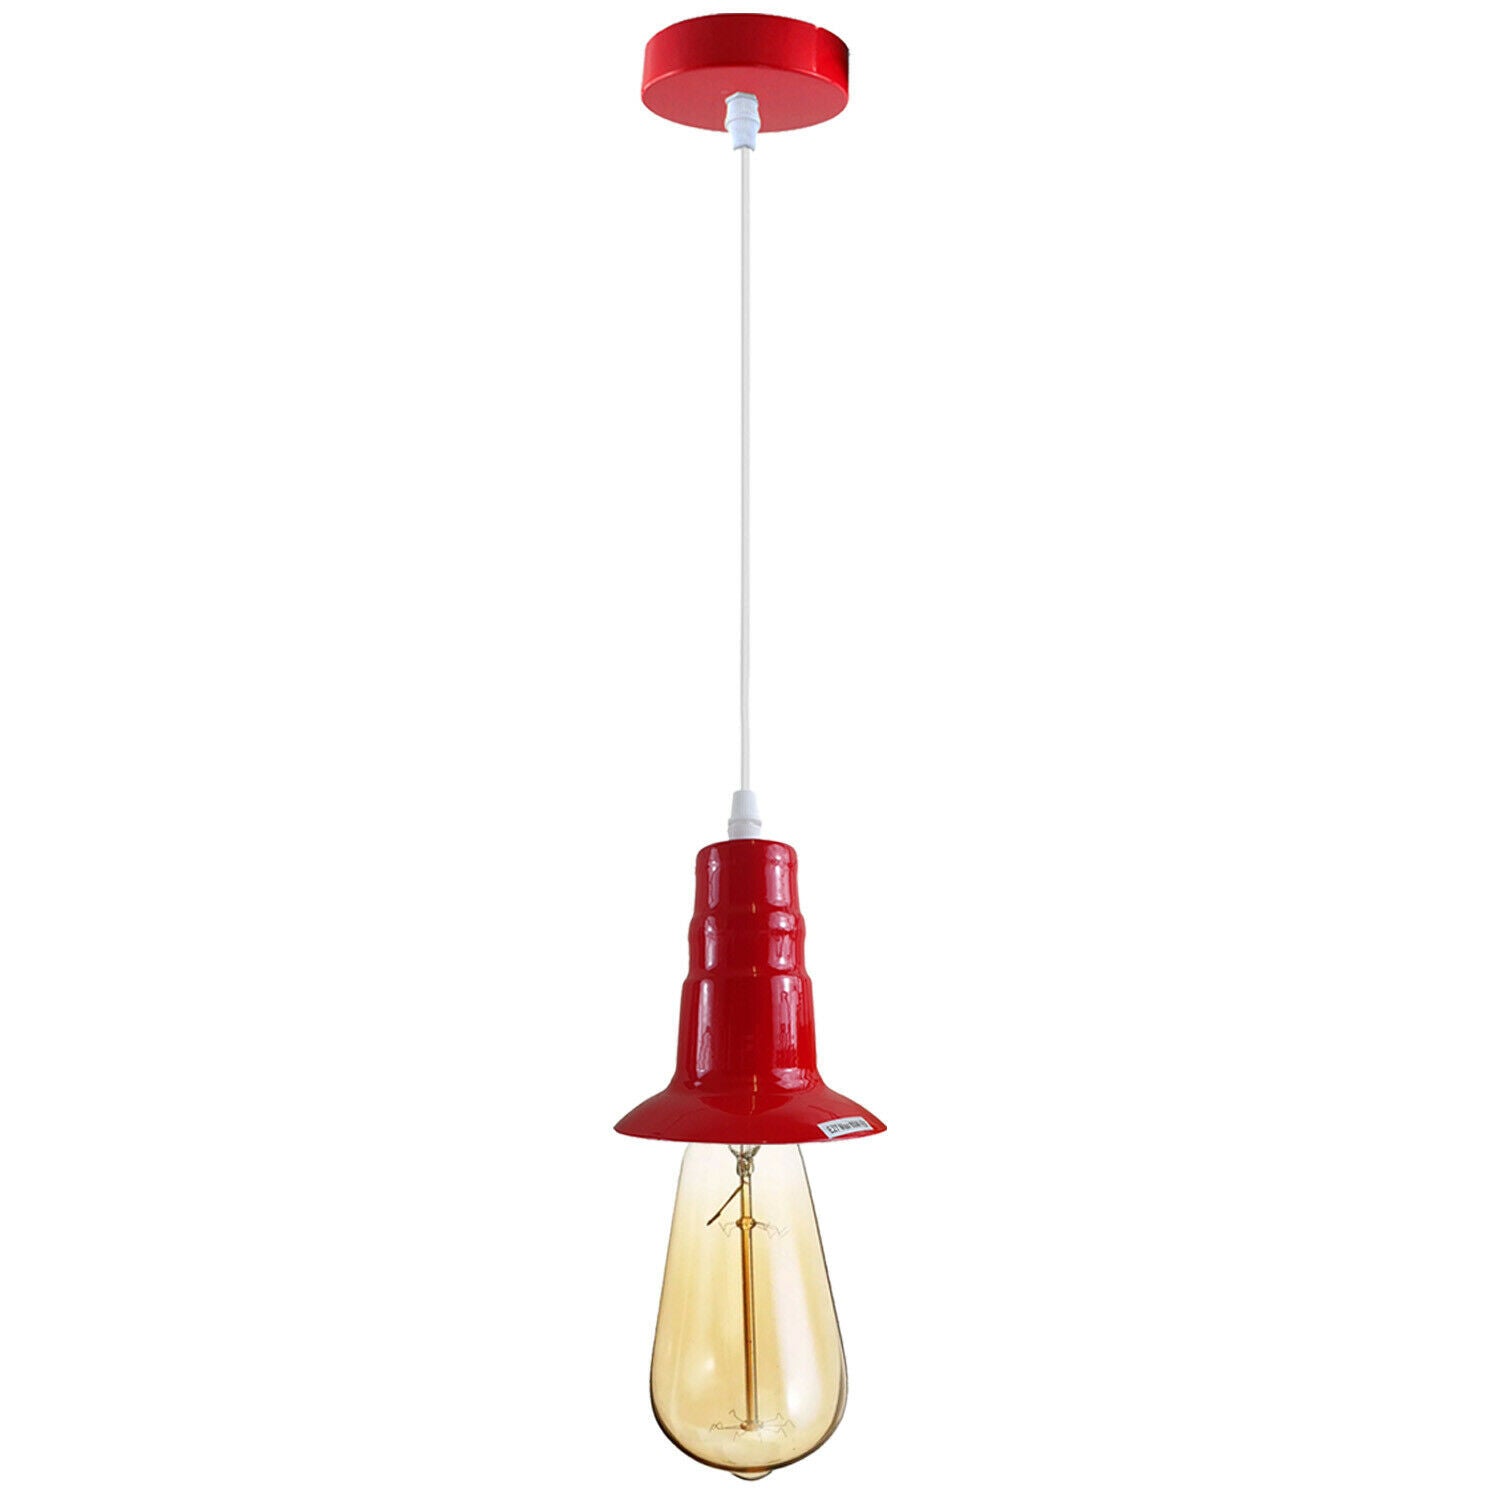 Red Ceiling Light Fitting Industrial Pendant Lamp Bulb Holder~1679 - electricalsone UK Ltd